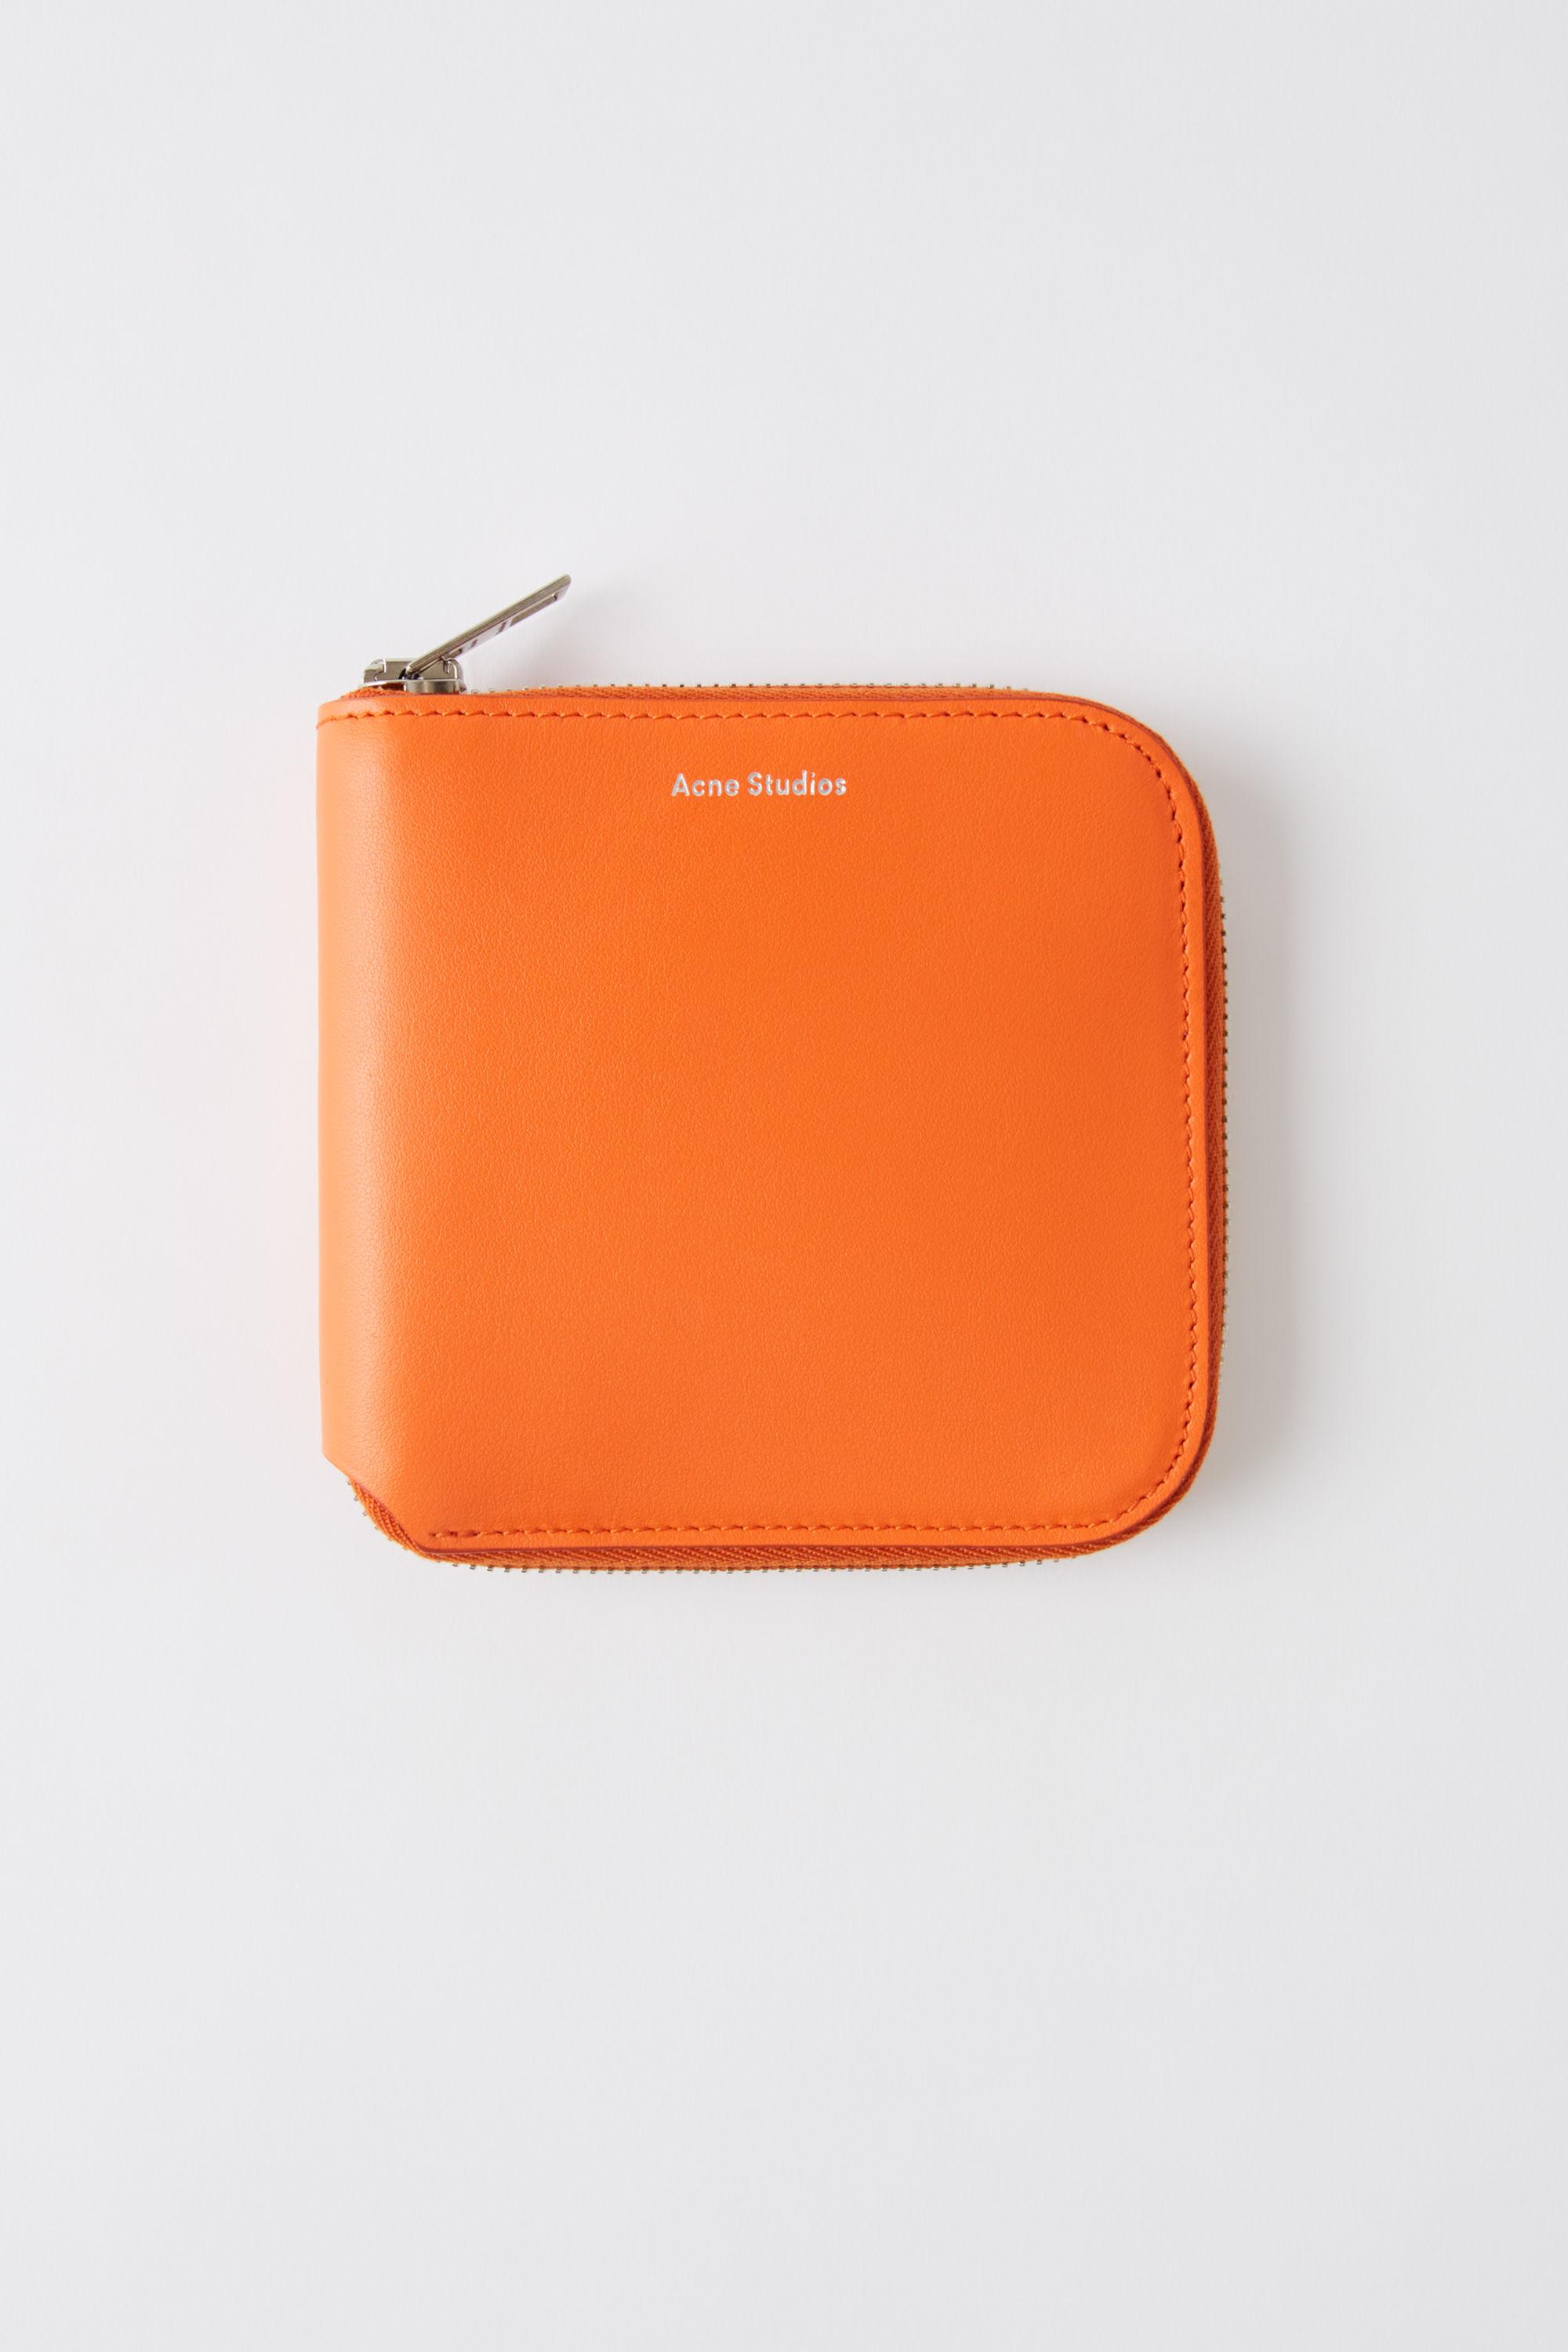 Acne Studios Leather Csarite S Orange Medium Zip Wallet - Lyst